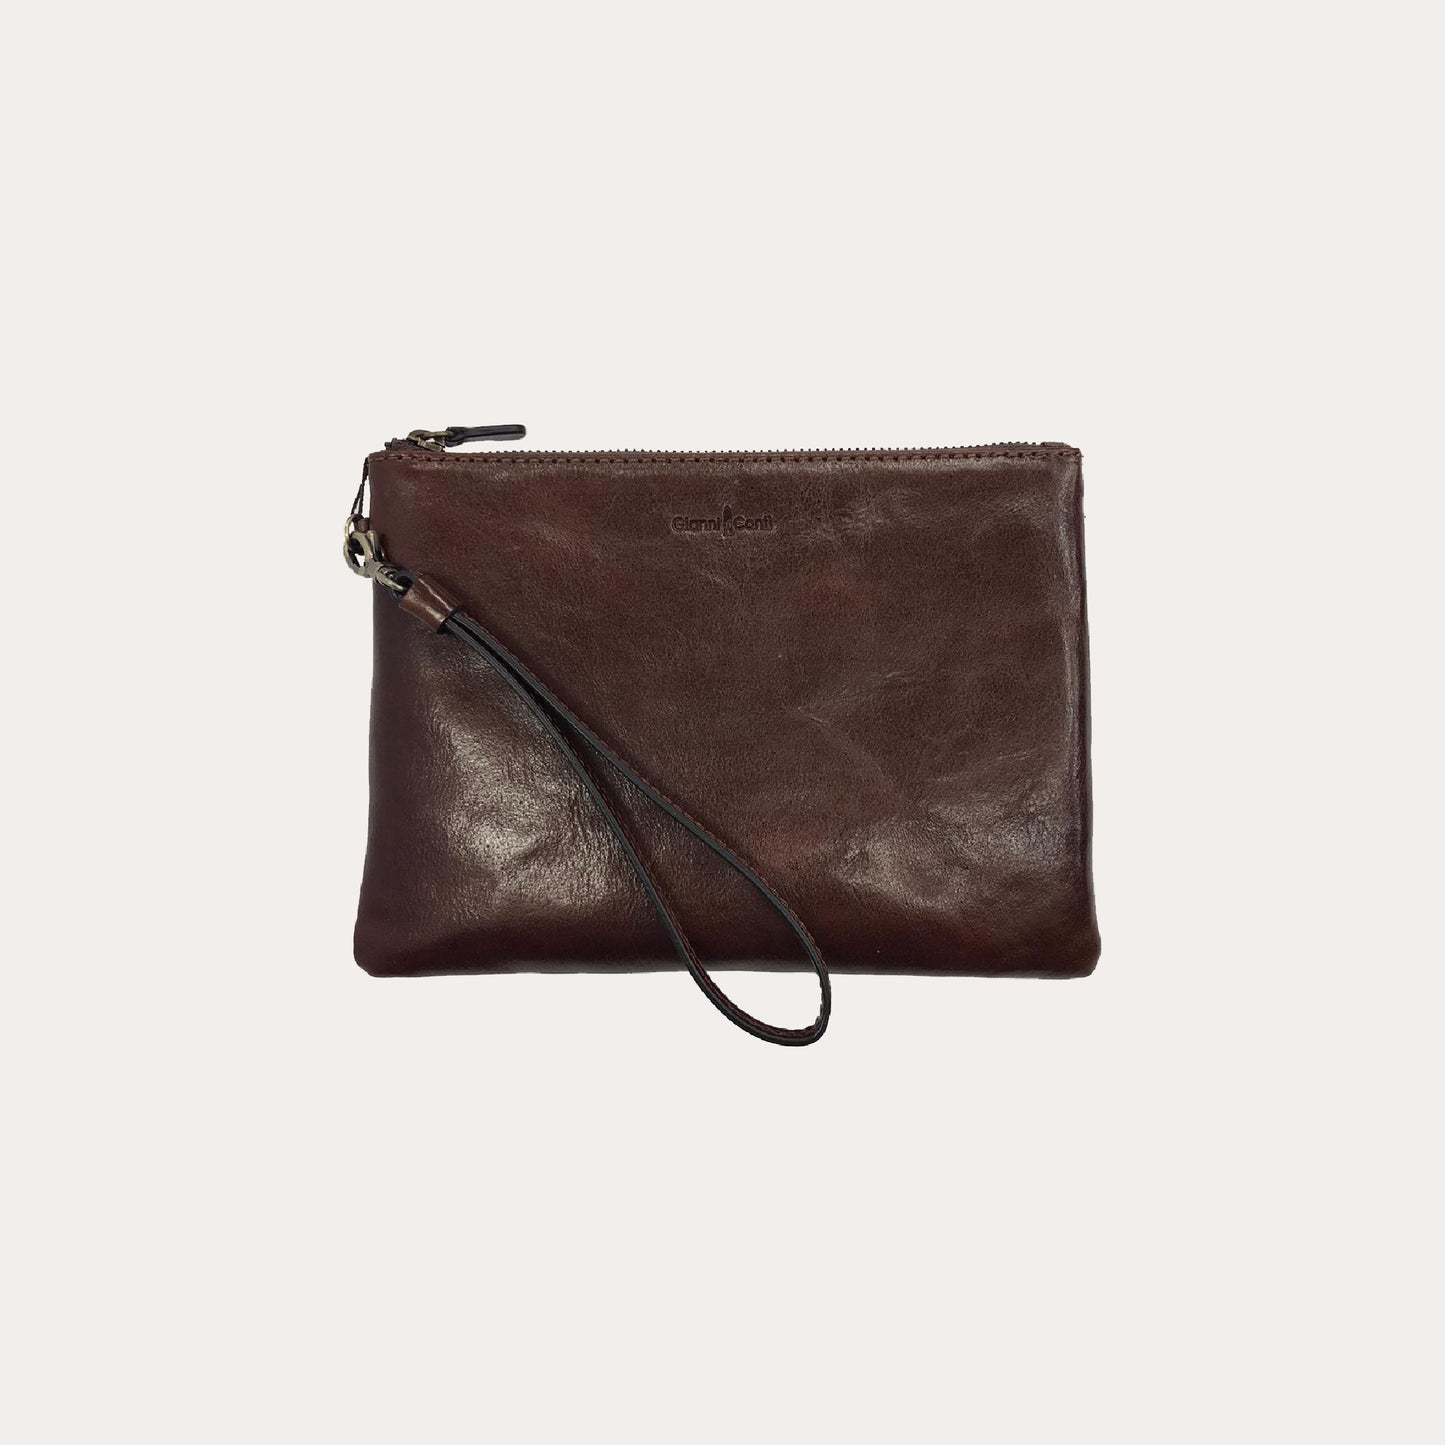 Gianni Conti Brown Leather Clutch Bag